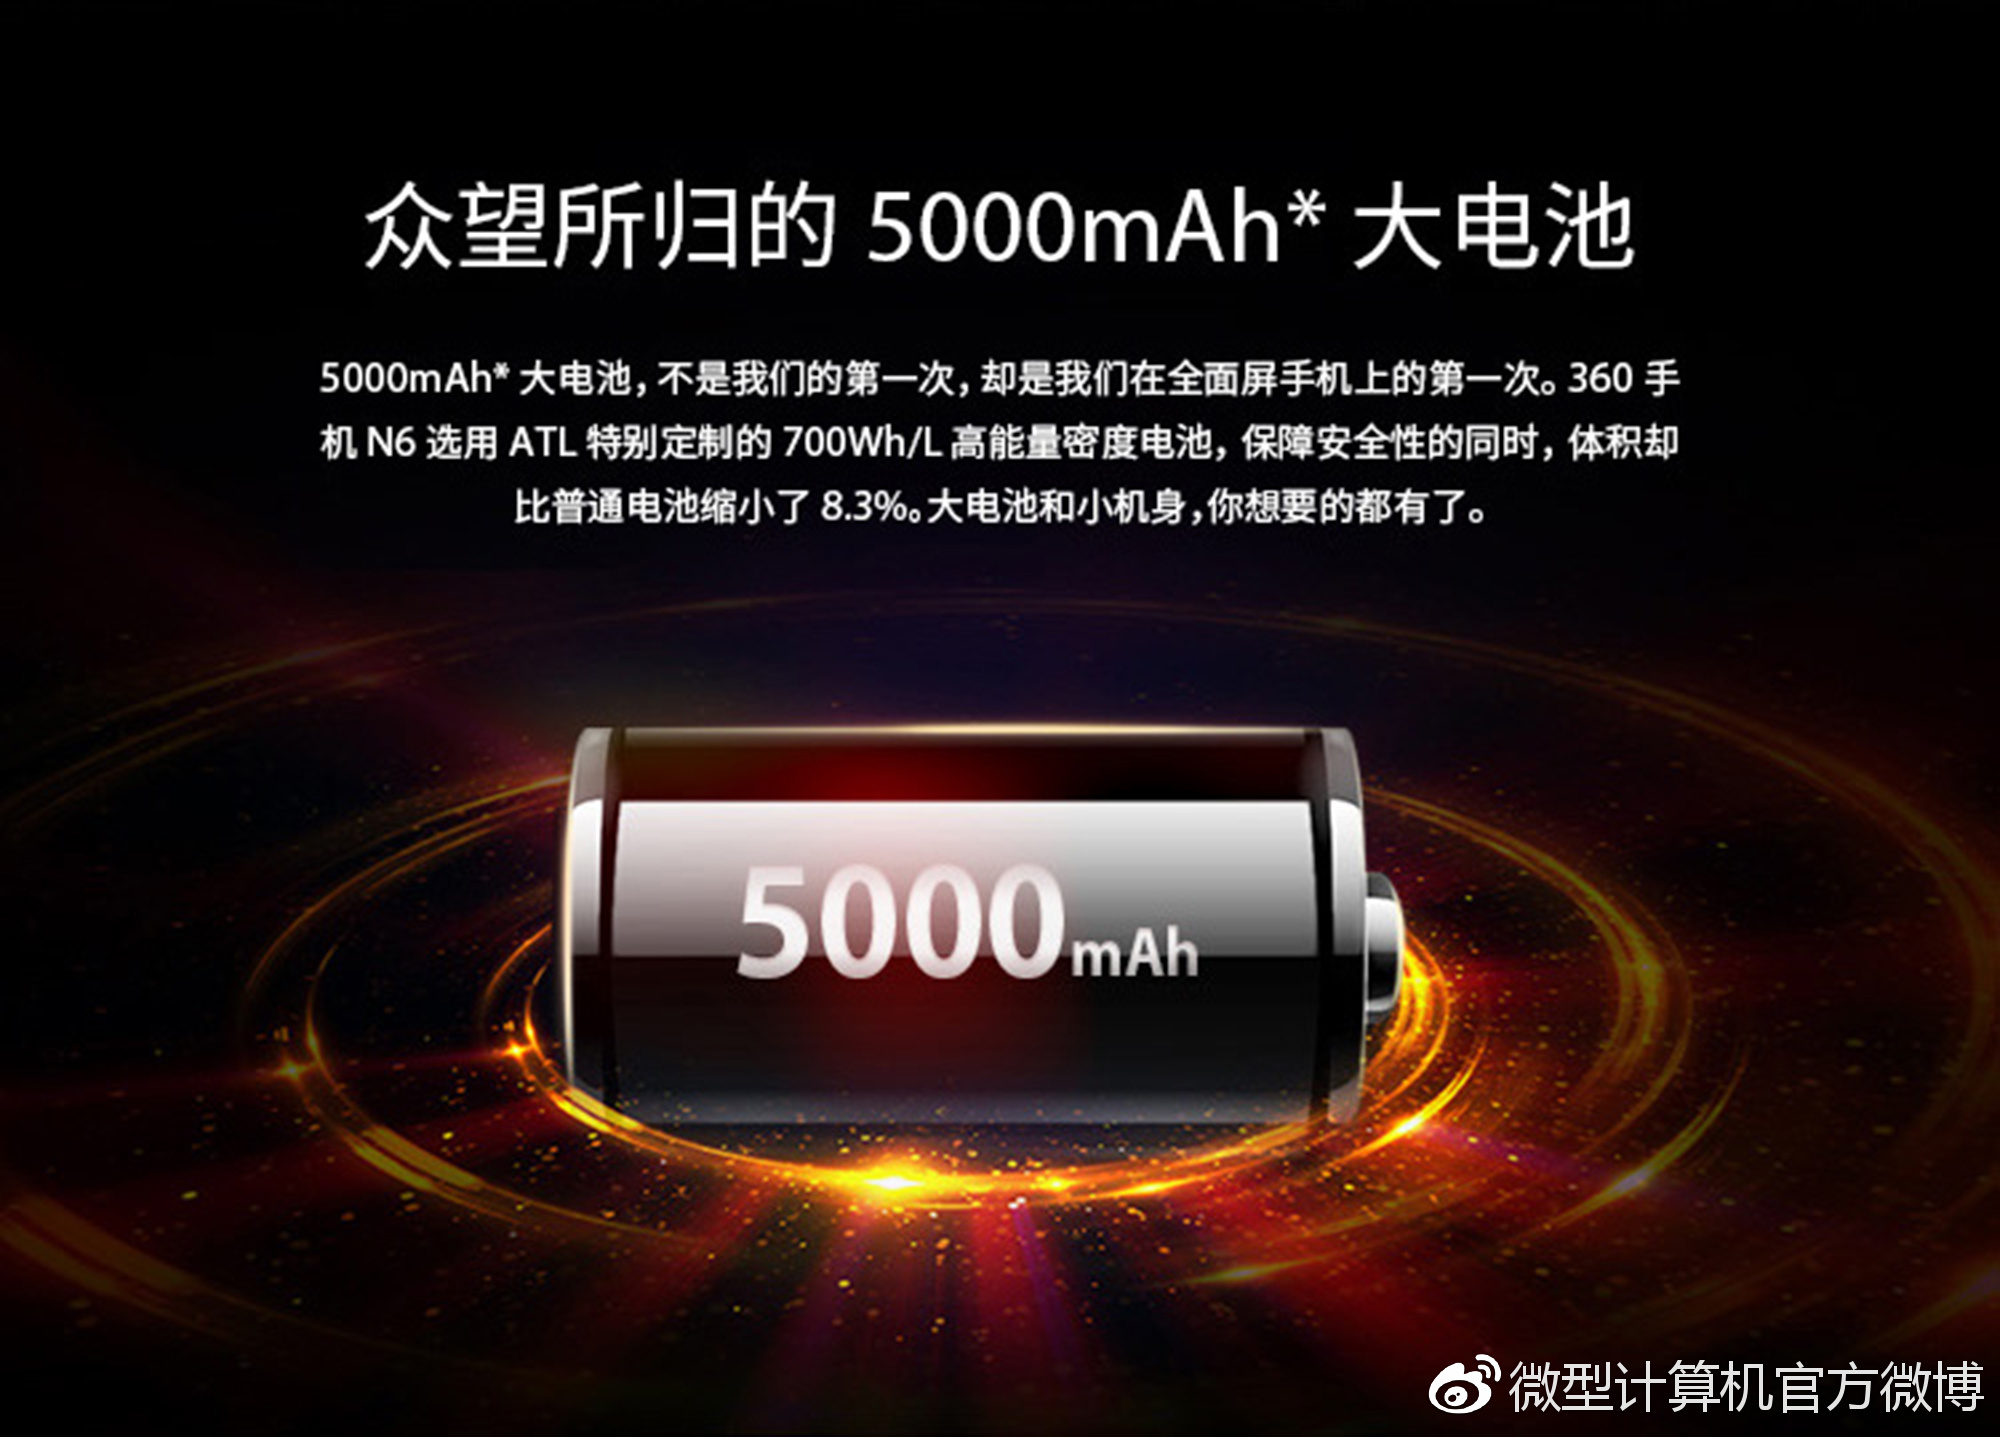 ▲360 N6的电池容量高达5030mAh